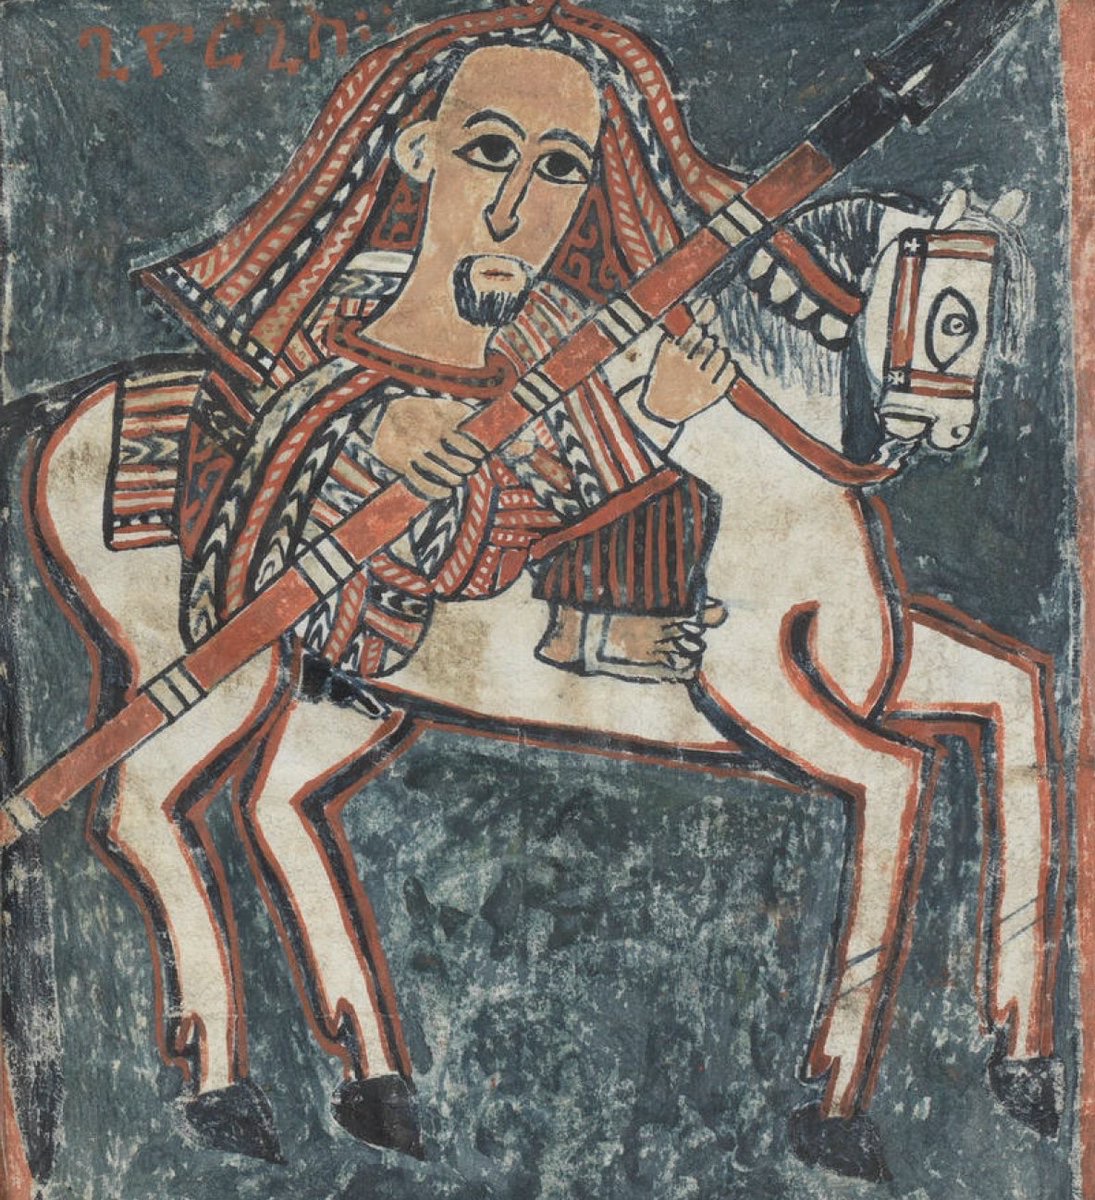 St George the Great Martyr! Ethiopia, 15th c. #george #saintgeorge #qiddusgiyorgis #rider #horse #africanart